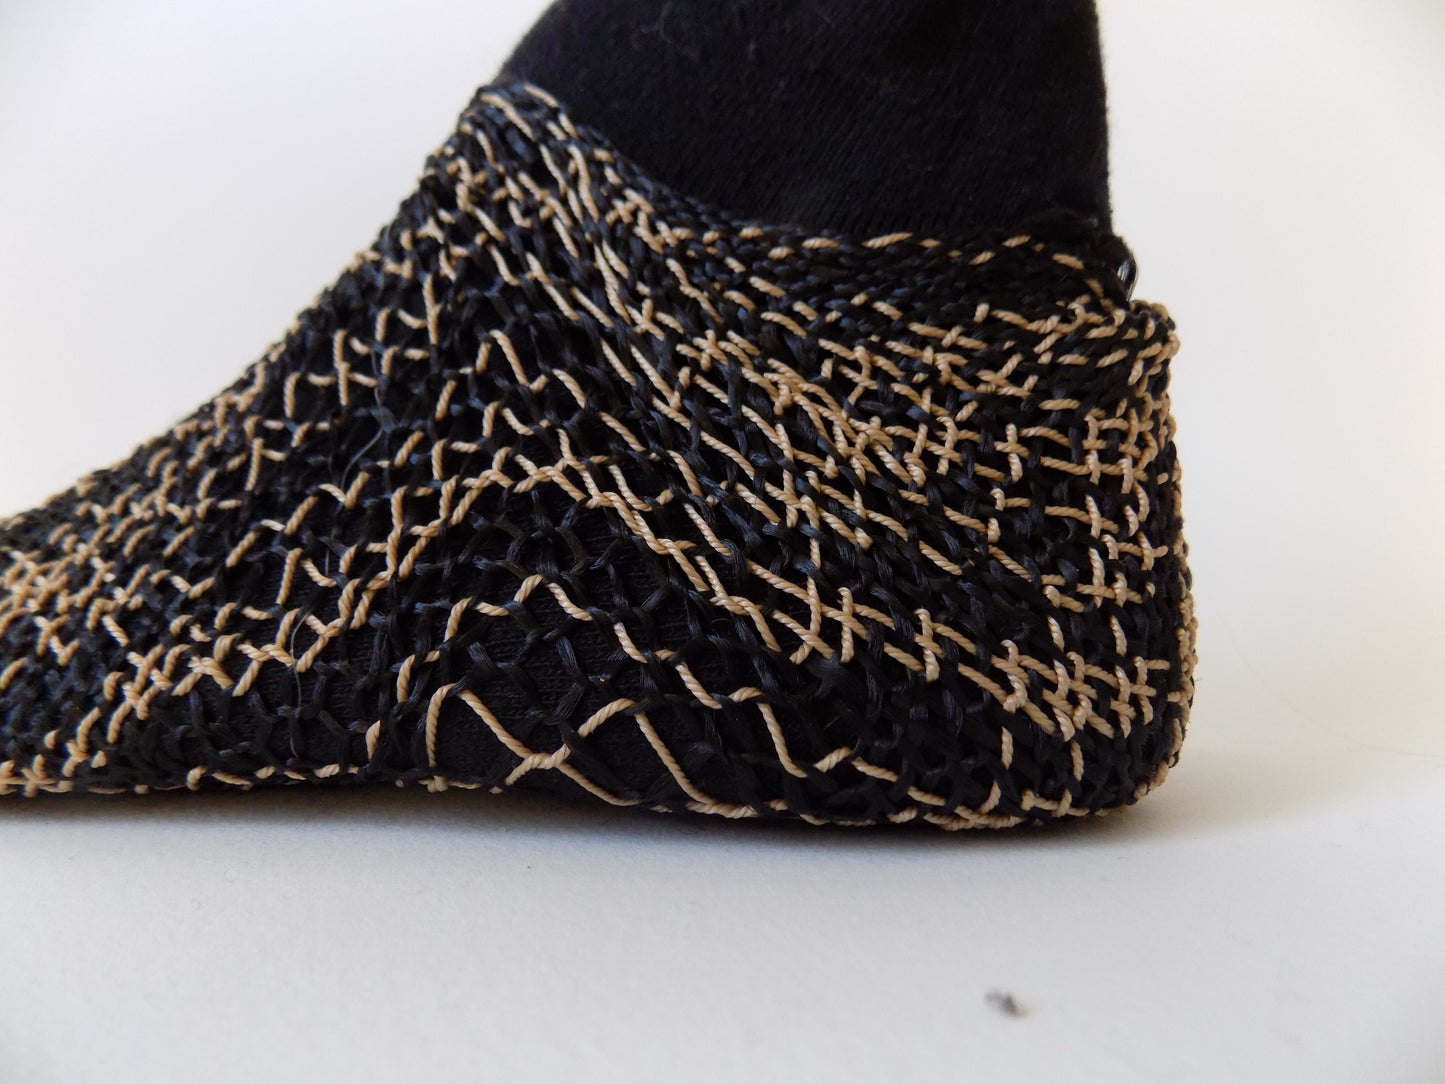 Footwear Patterning Fabric Studies